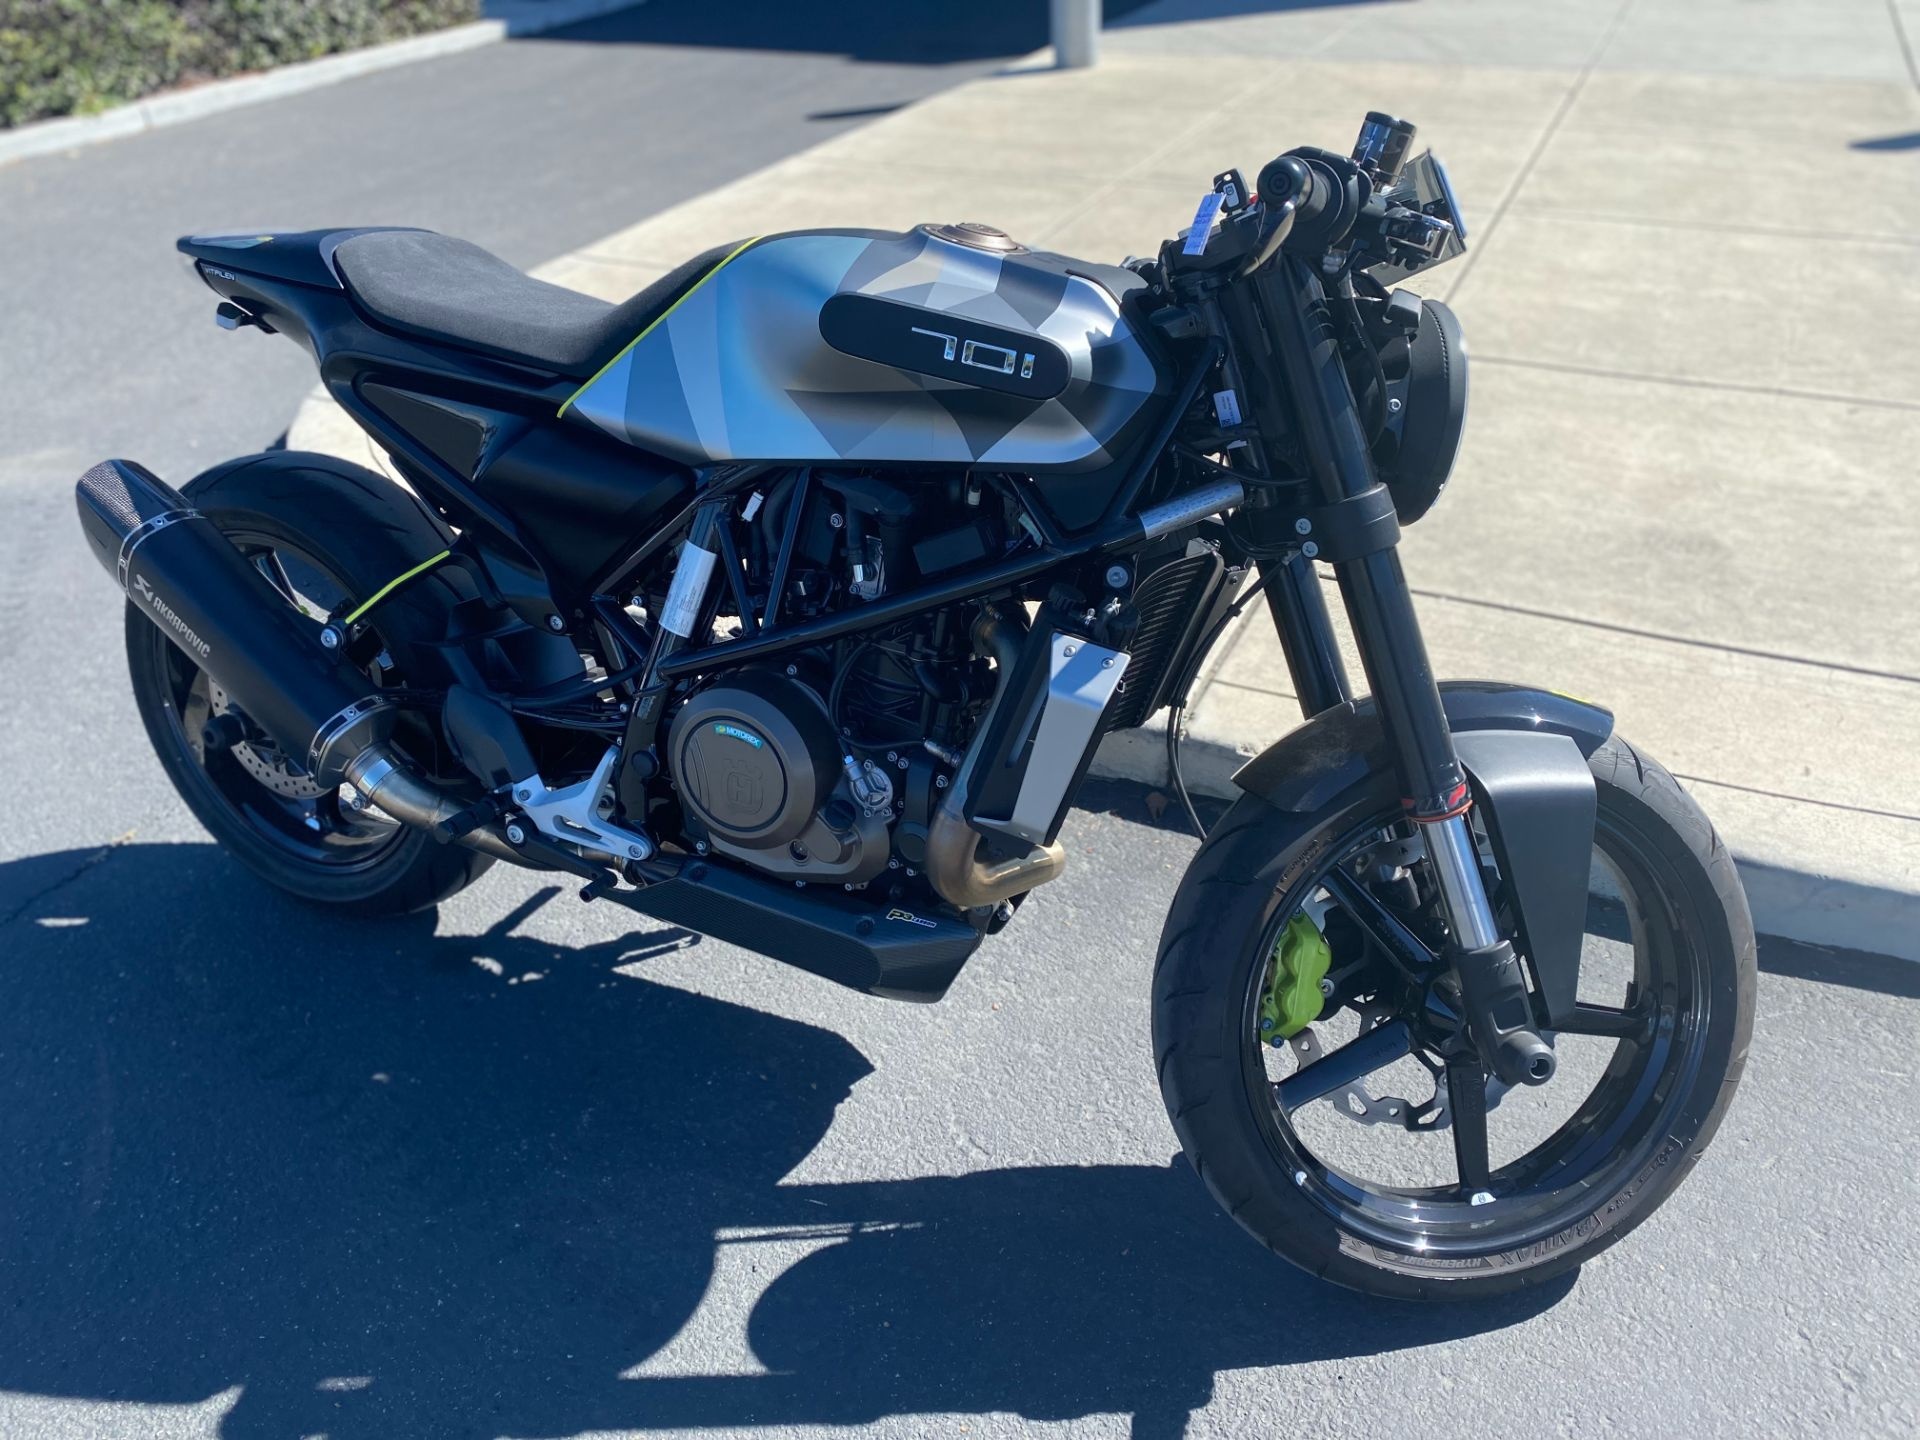 Husqvarna SVARTPILEN 701, Used 2019 motorcycle, Hollister CA, Black, 1920x1440 HD Desktop